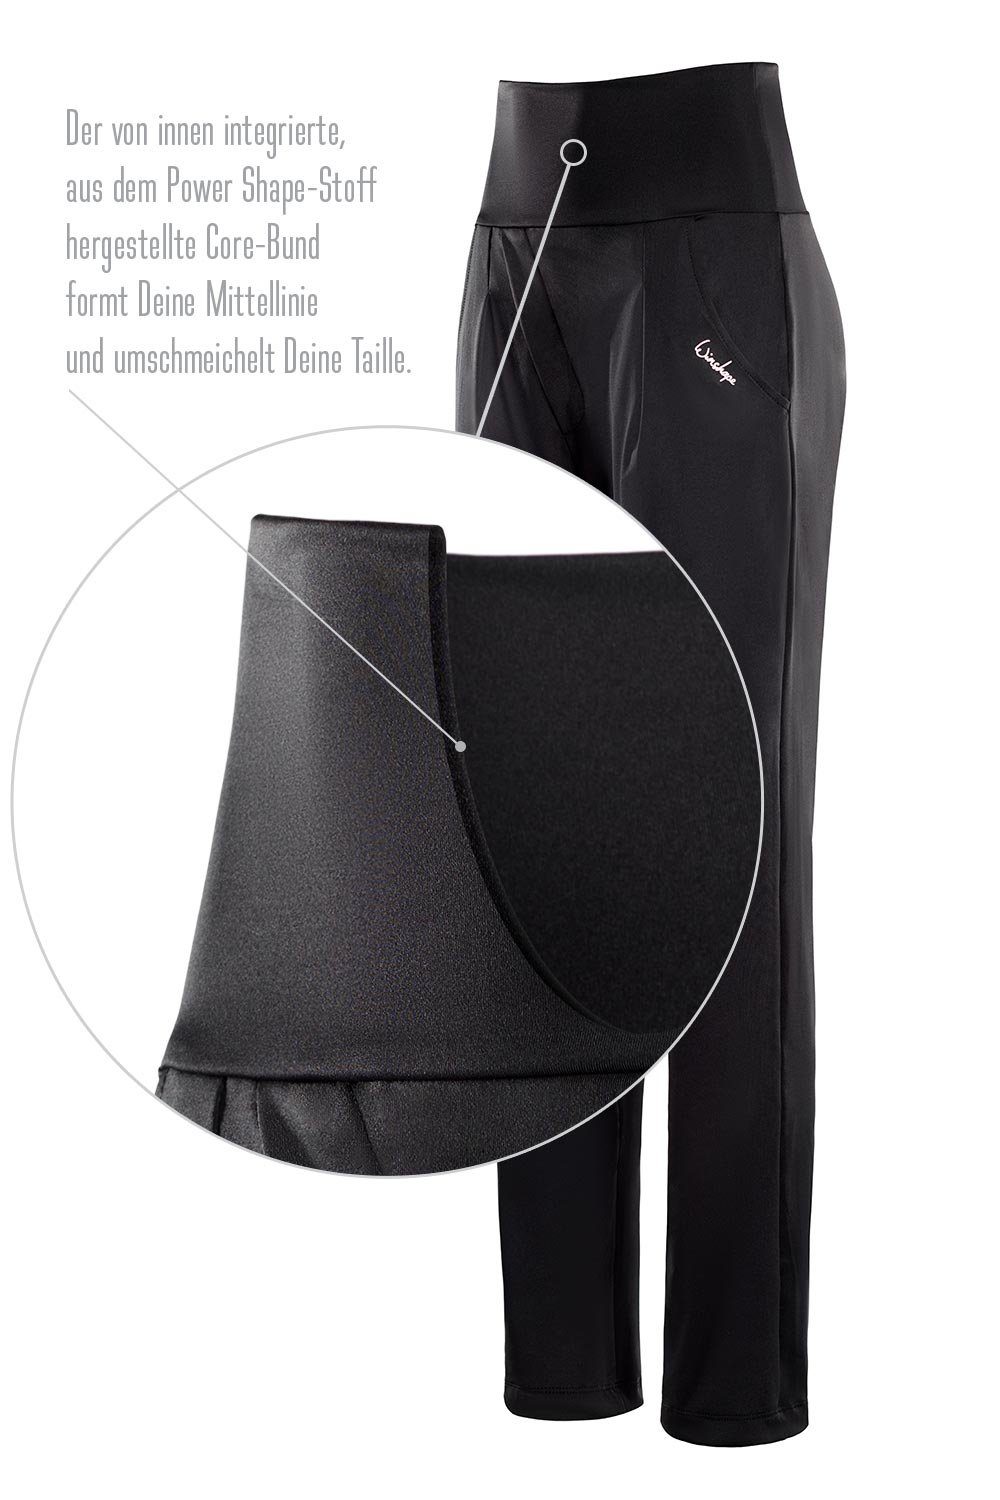 Core-Bund Light Functional Winshape Baggy Waist HP103 mit High Pants Sporthose